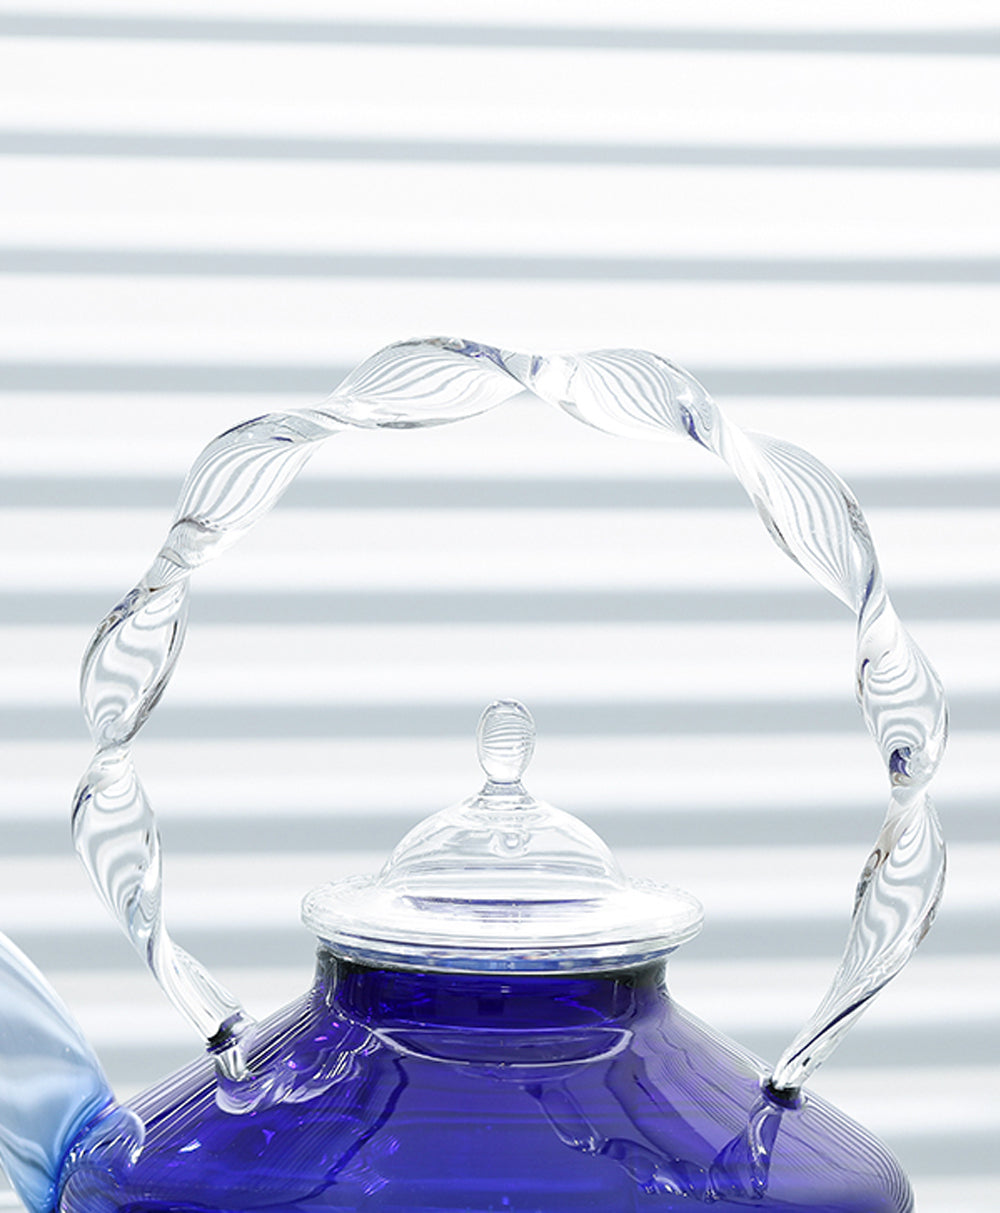 IwaiLoft 手作り 耐熱ガラス ティーポット 600mL 茶こし付き ガラス製ポット 透明 Klein Blue 紅茶ポット フルーツティー 花茶 台湾茶 ハーフティー に ガラス急須 健康茶器【直火可】【送料無料】